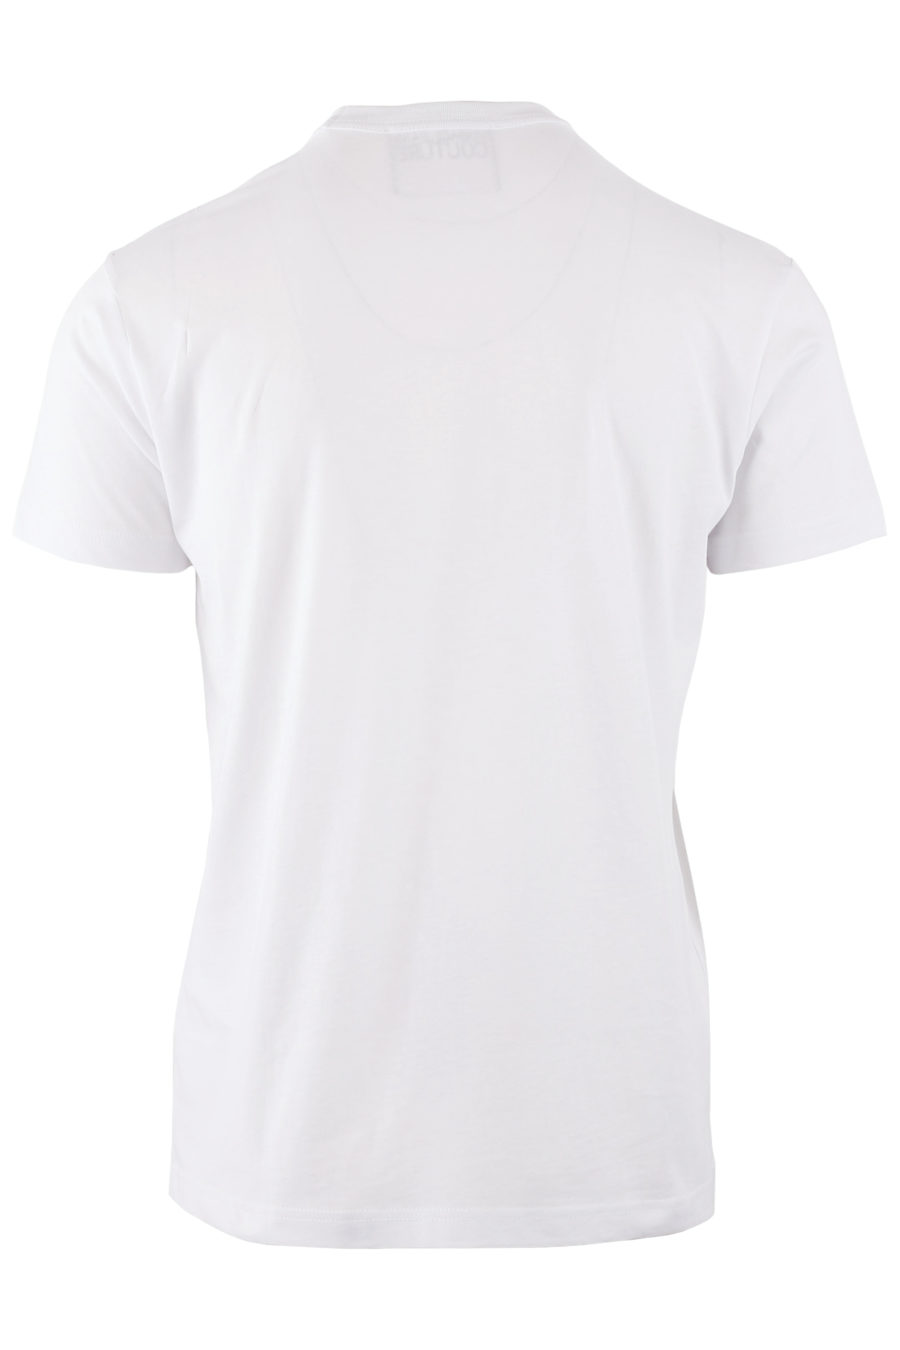 Camiseta blanca con logotipo grande negro - ffd9189bc4df2c18229d866379b9b0a094071dfd